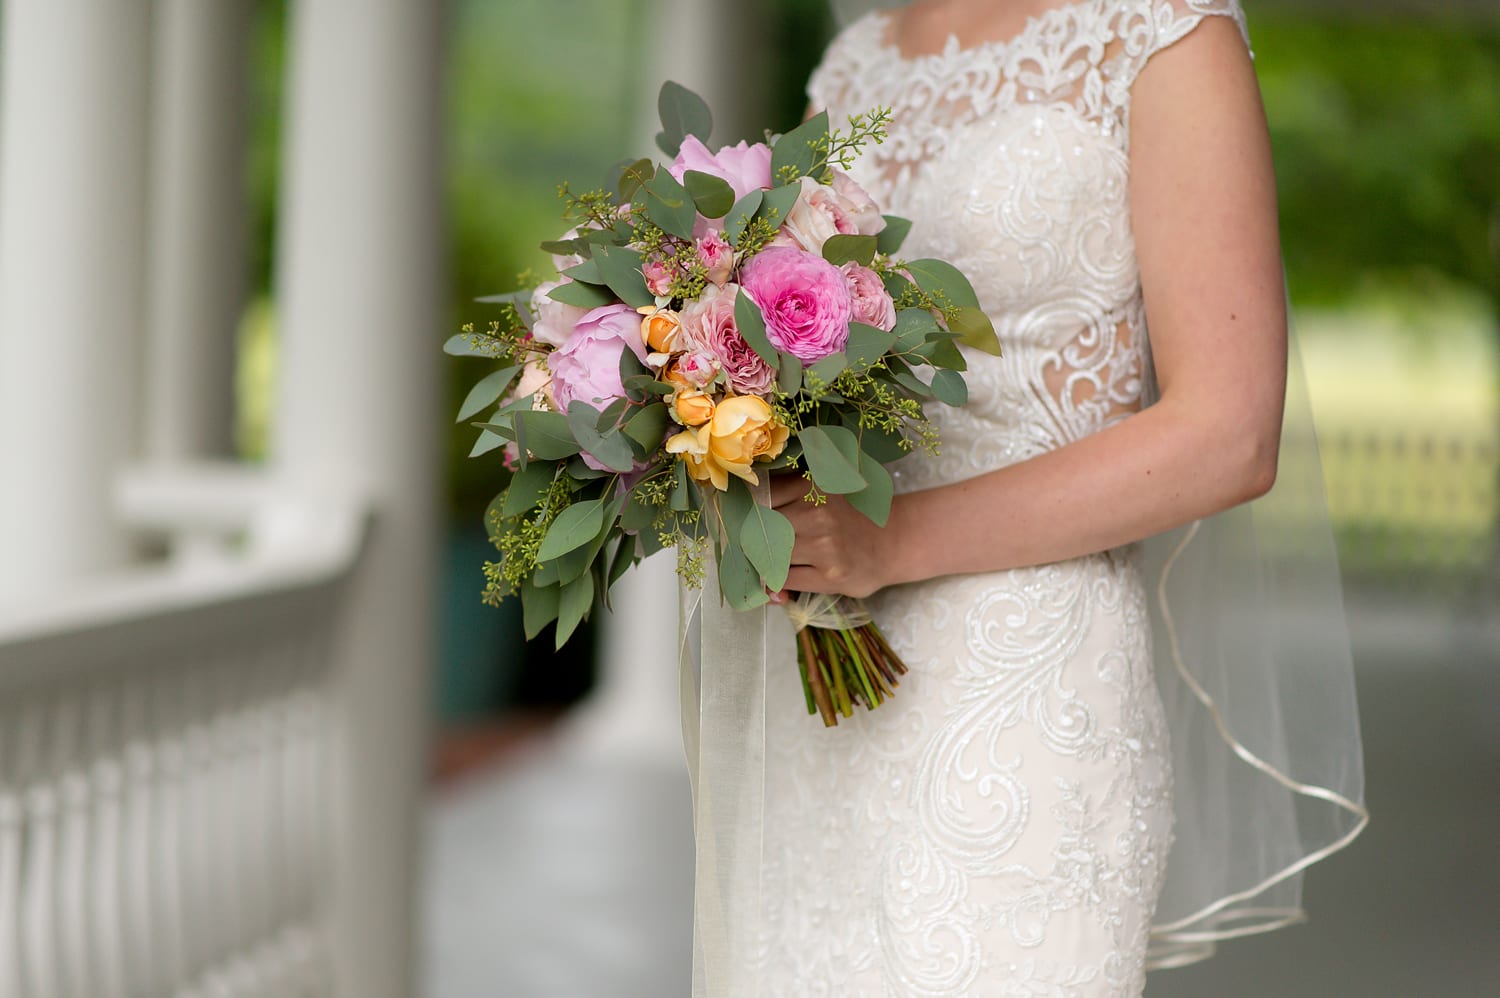  Beautiful Bridal bouquet by Pozie by Natalie at Maplehurst Farm wedding venue